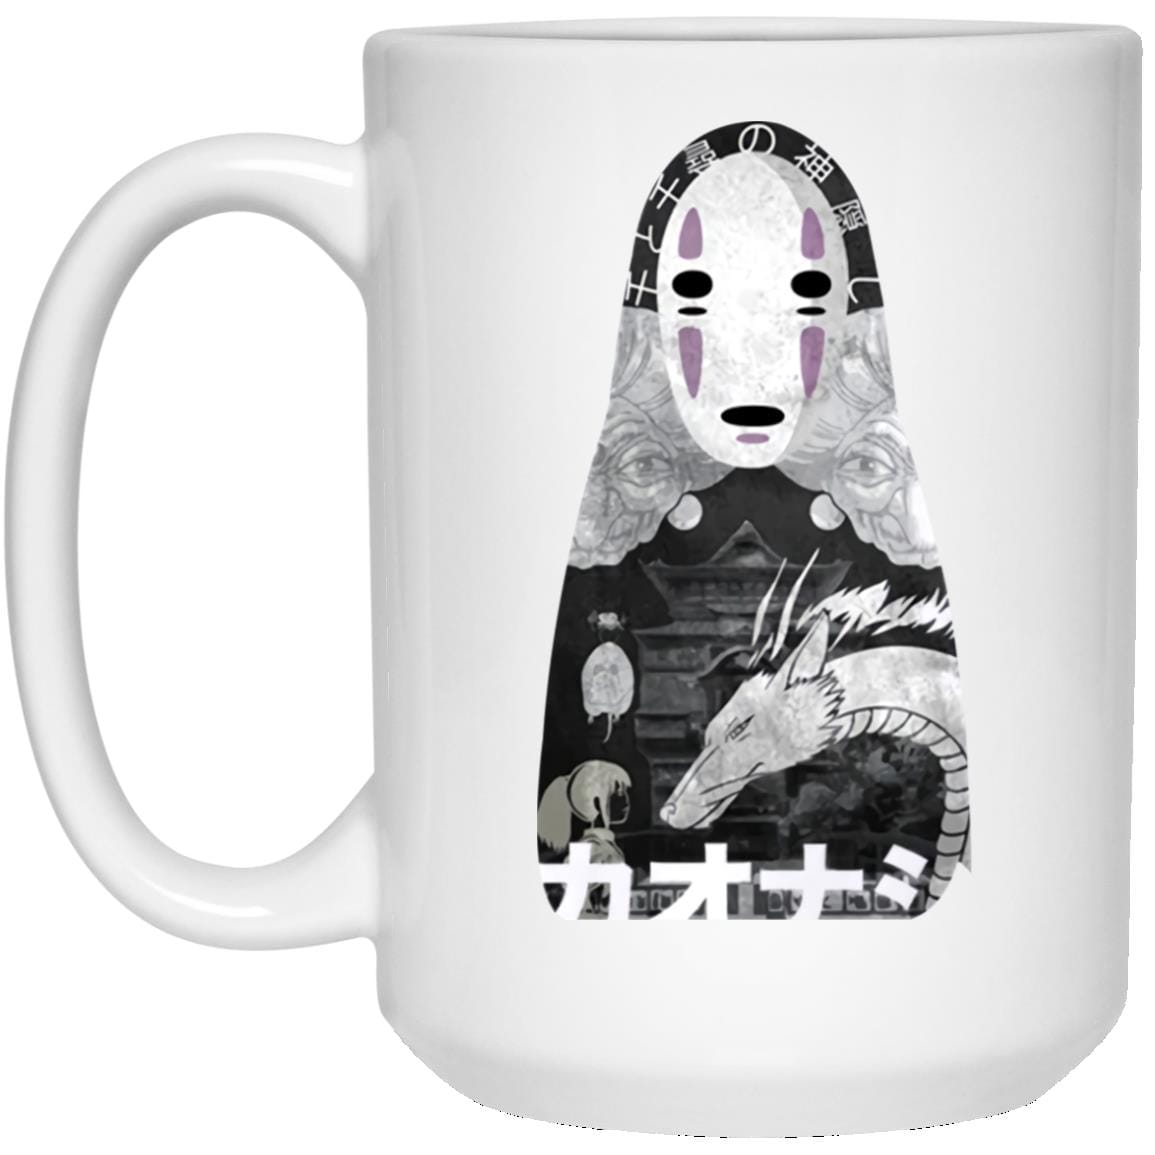 Spirited Away Kaonashi Cutout Black Mug